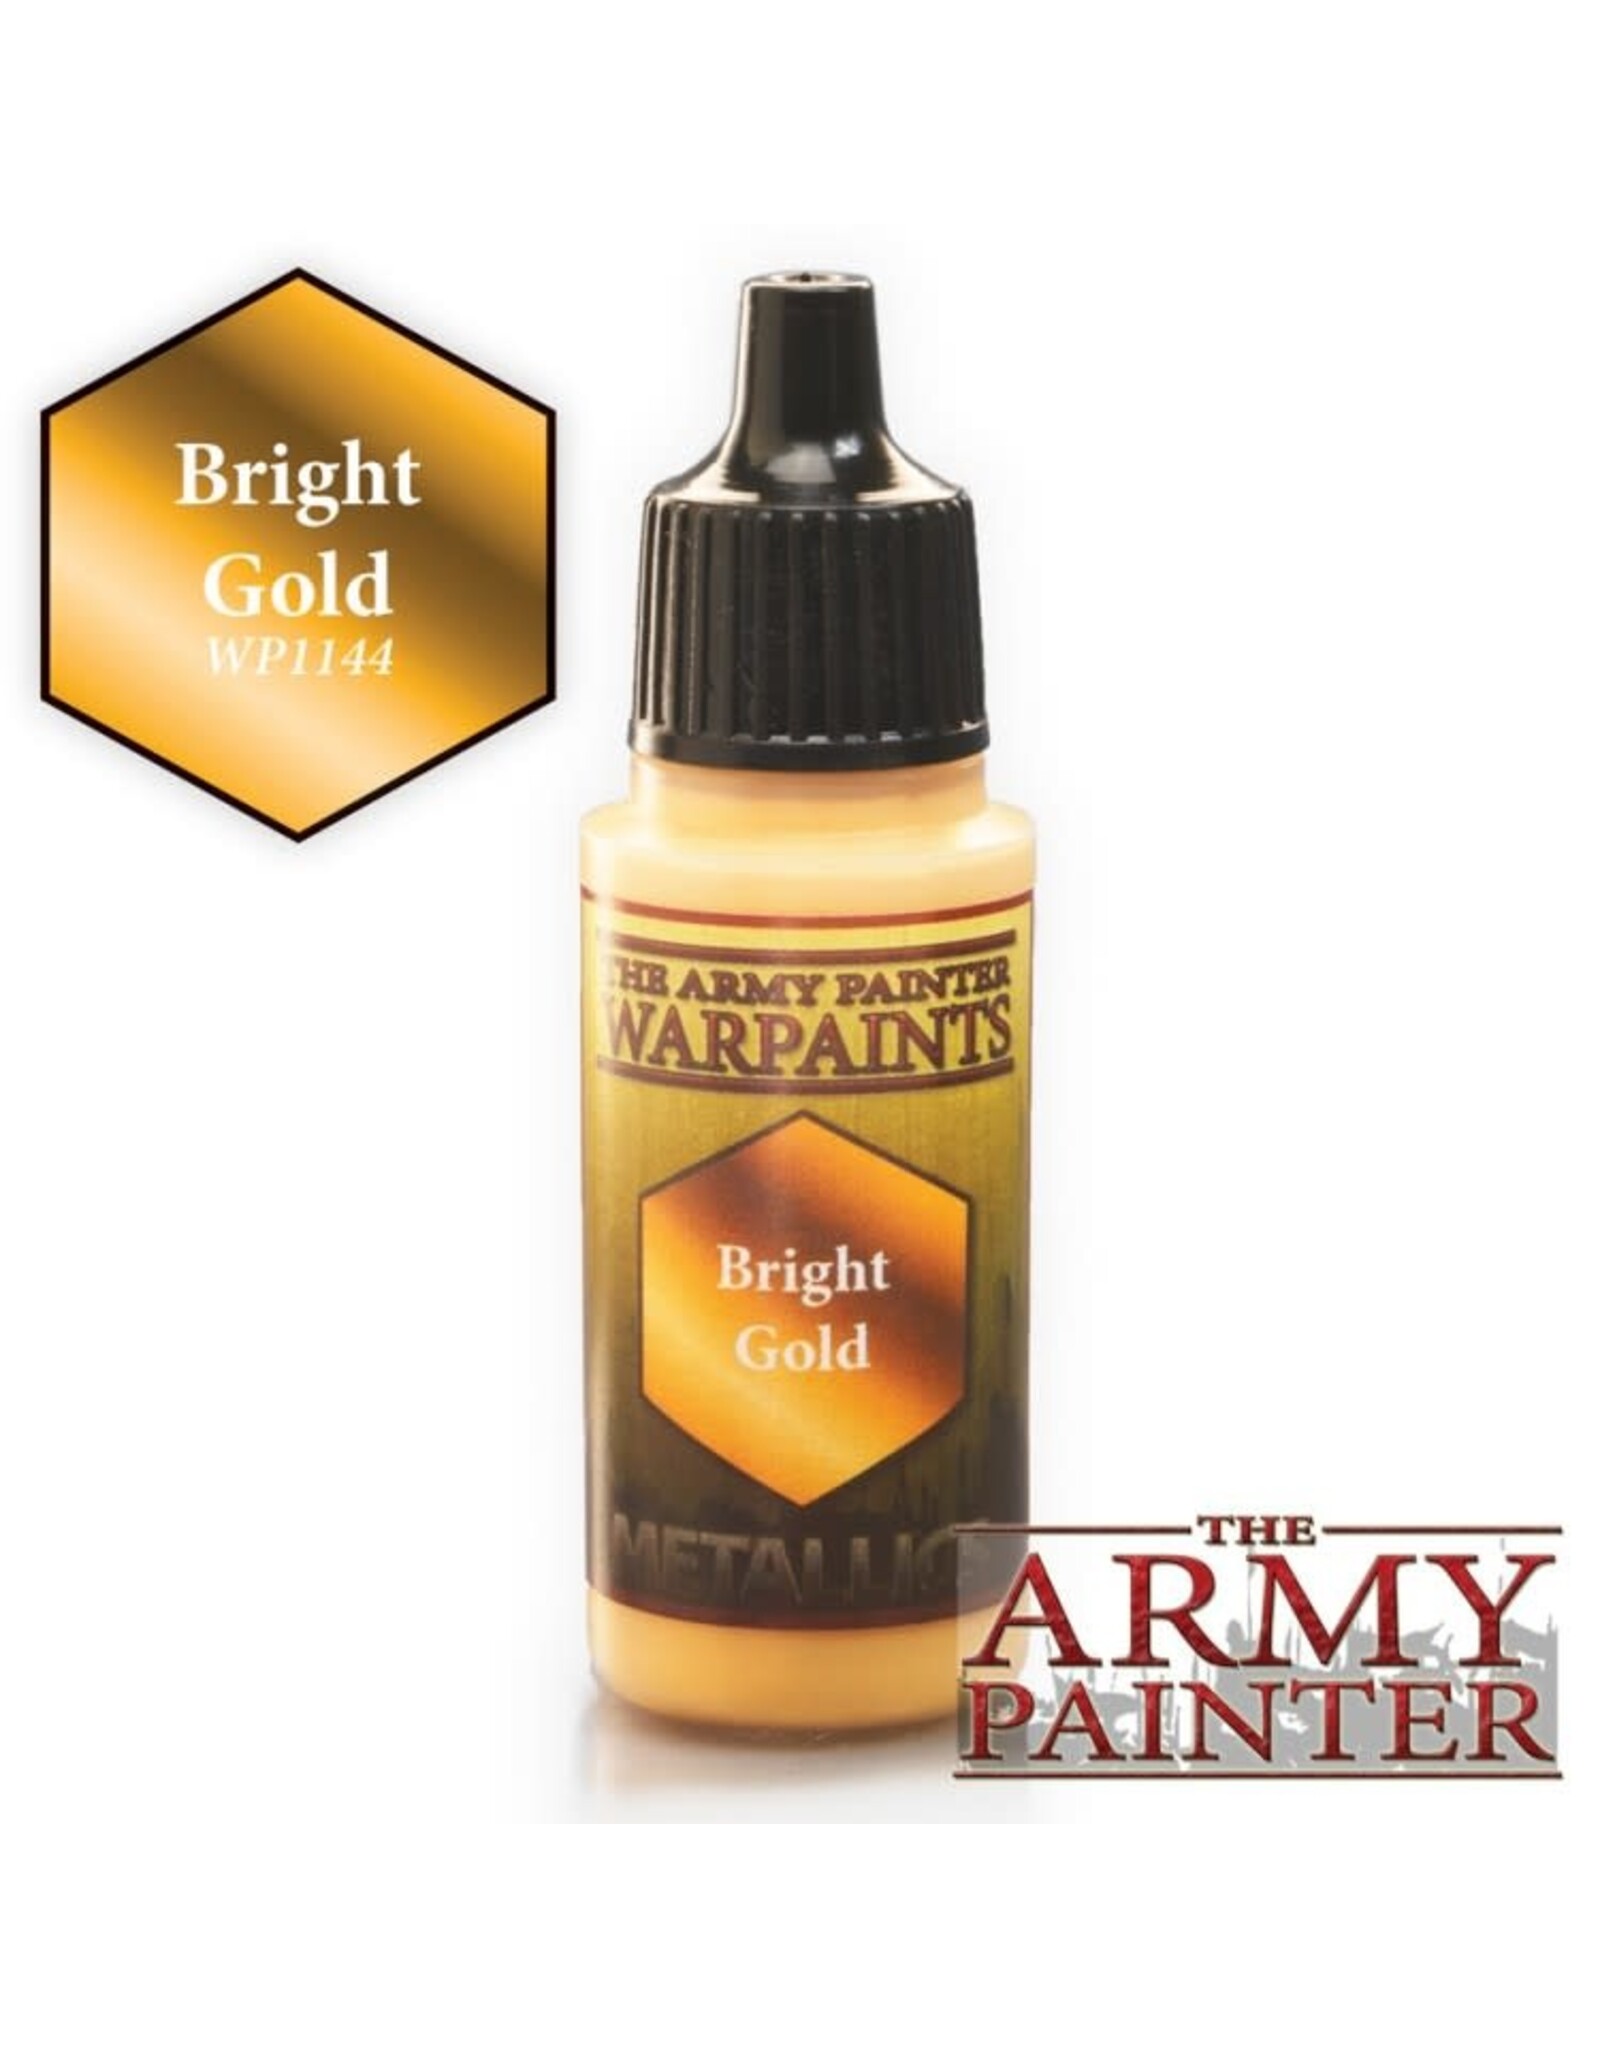 Army Painter Warpaints: Bright Gold